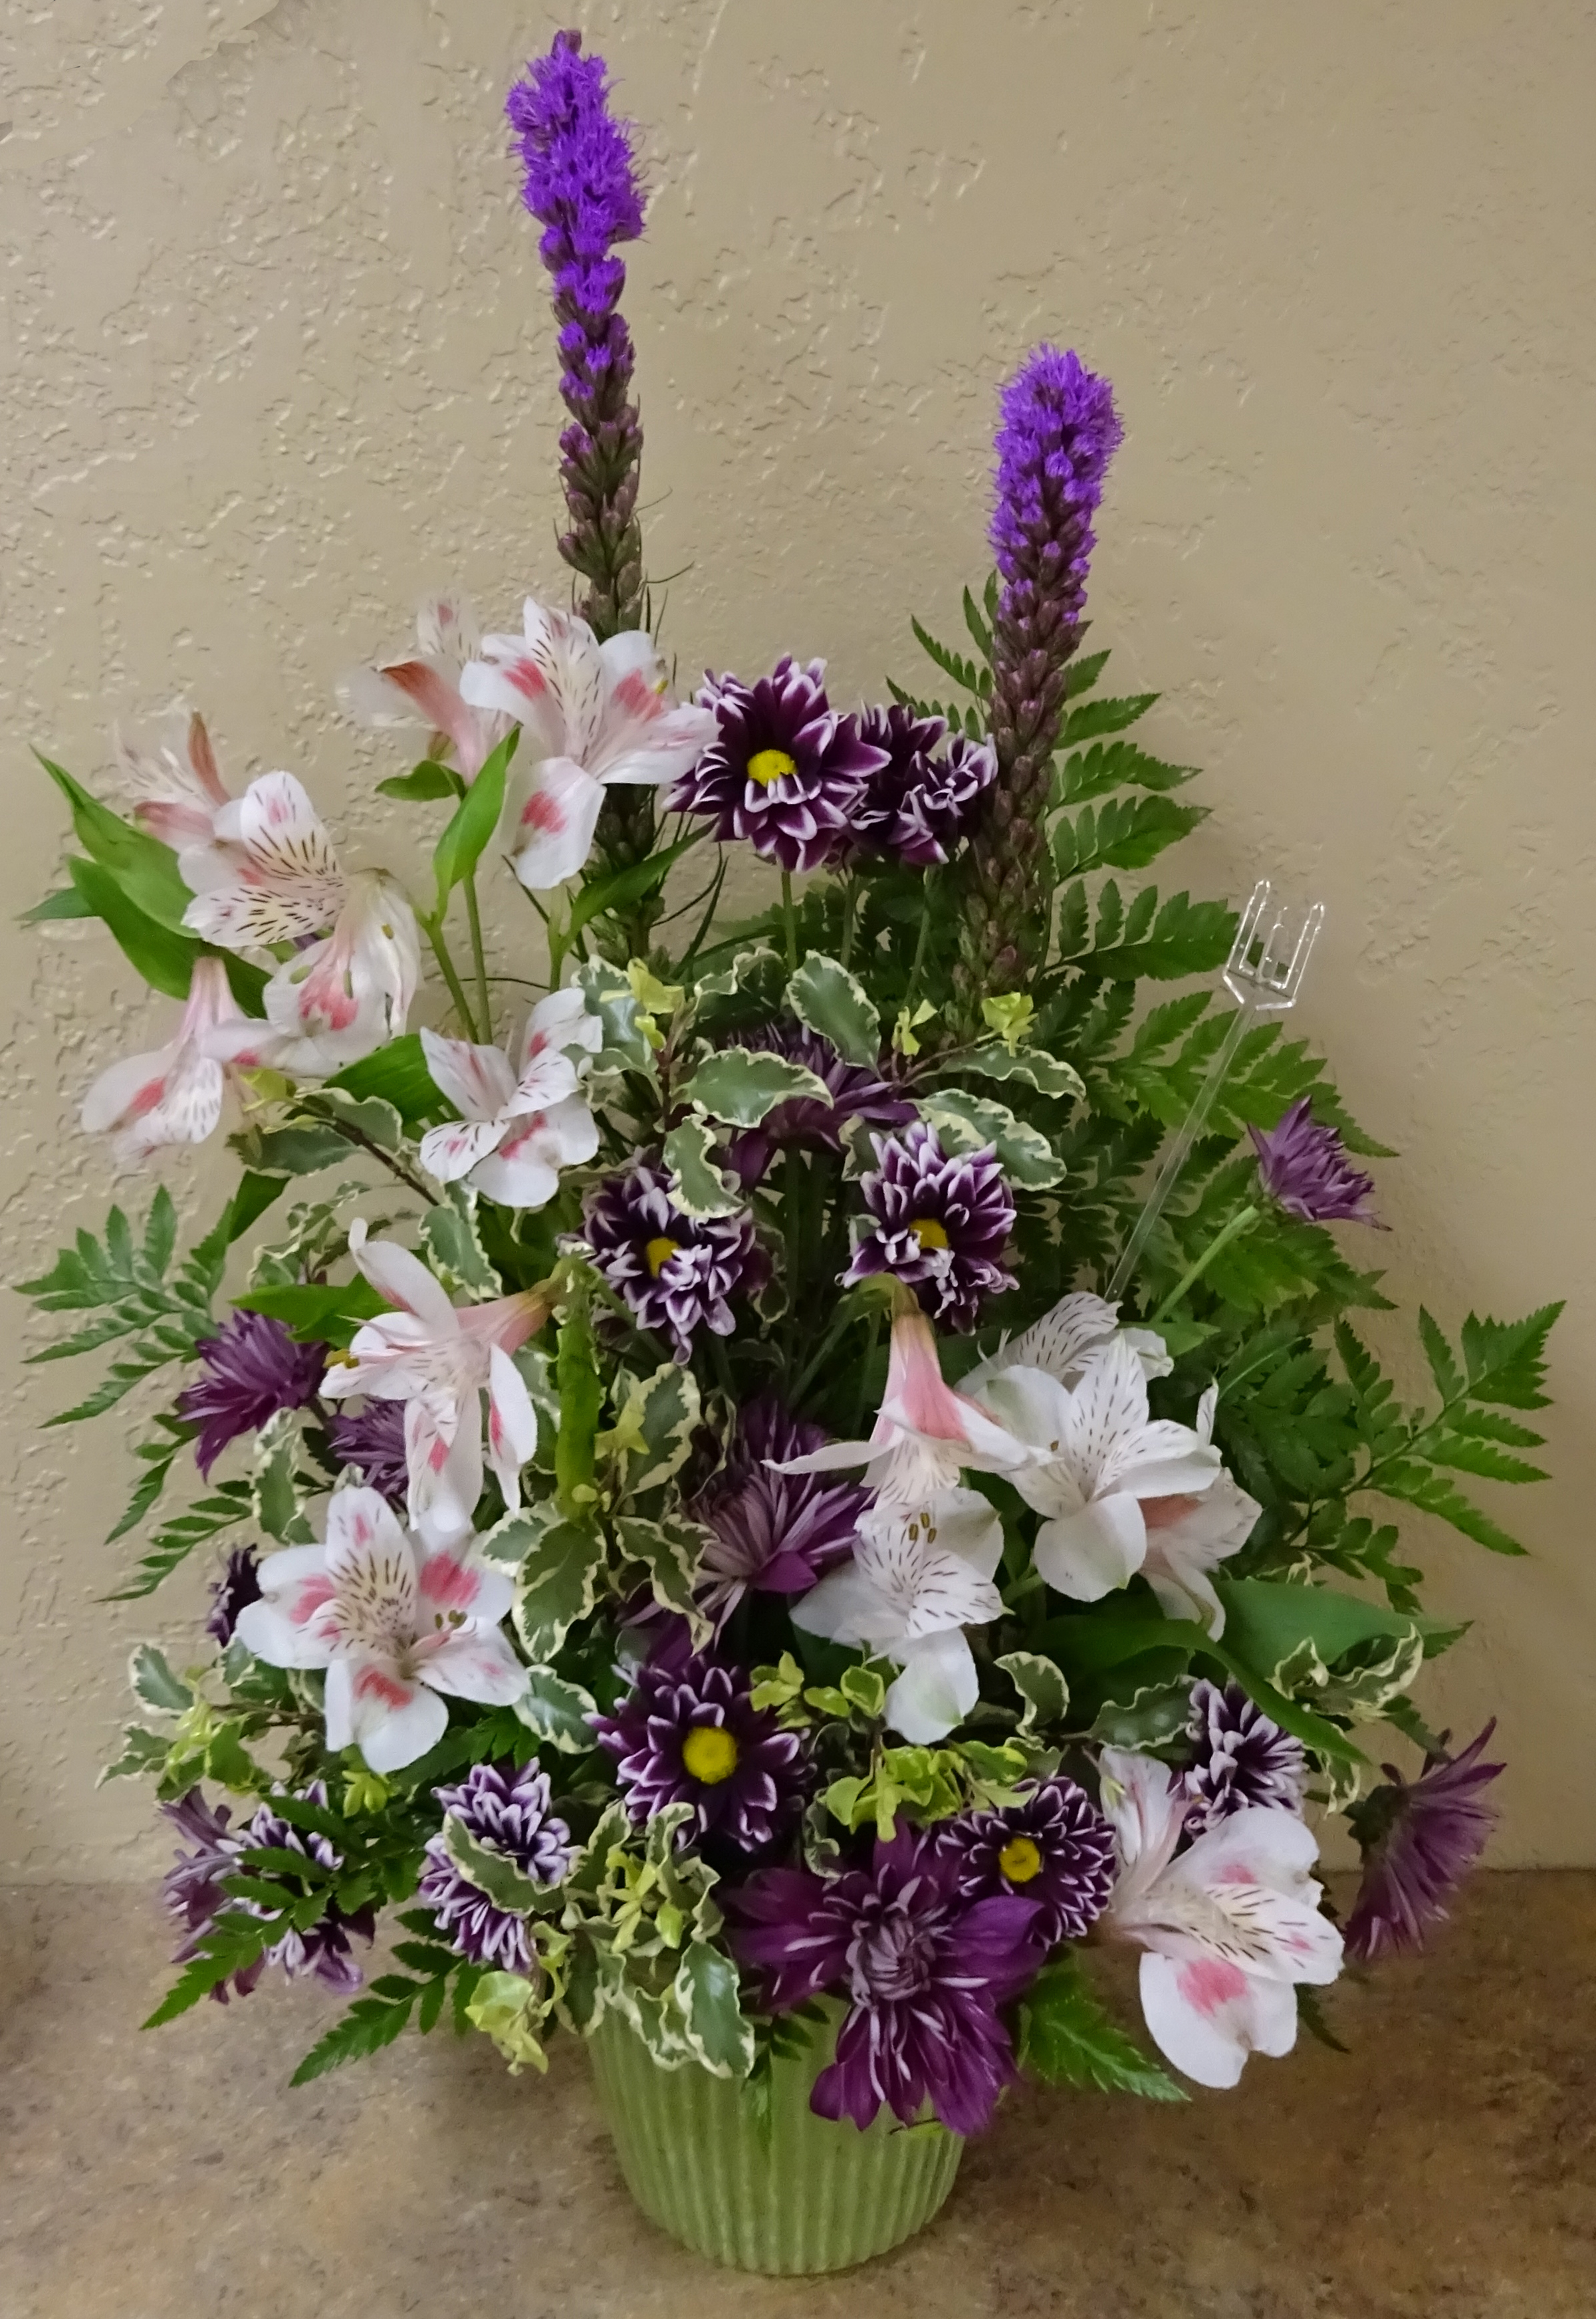 Flowers from Kathy Baumann, Roger & Patti Baumann, Curt & Diane Rawstern, and Families